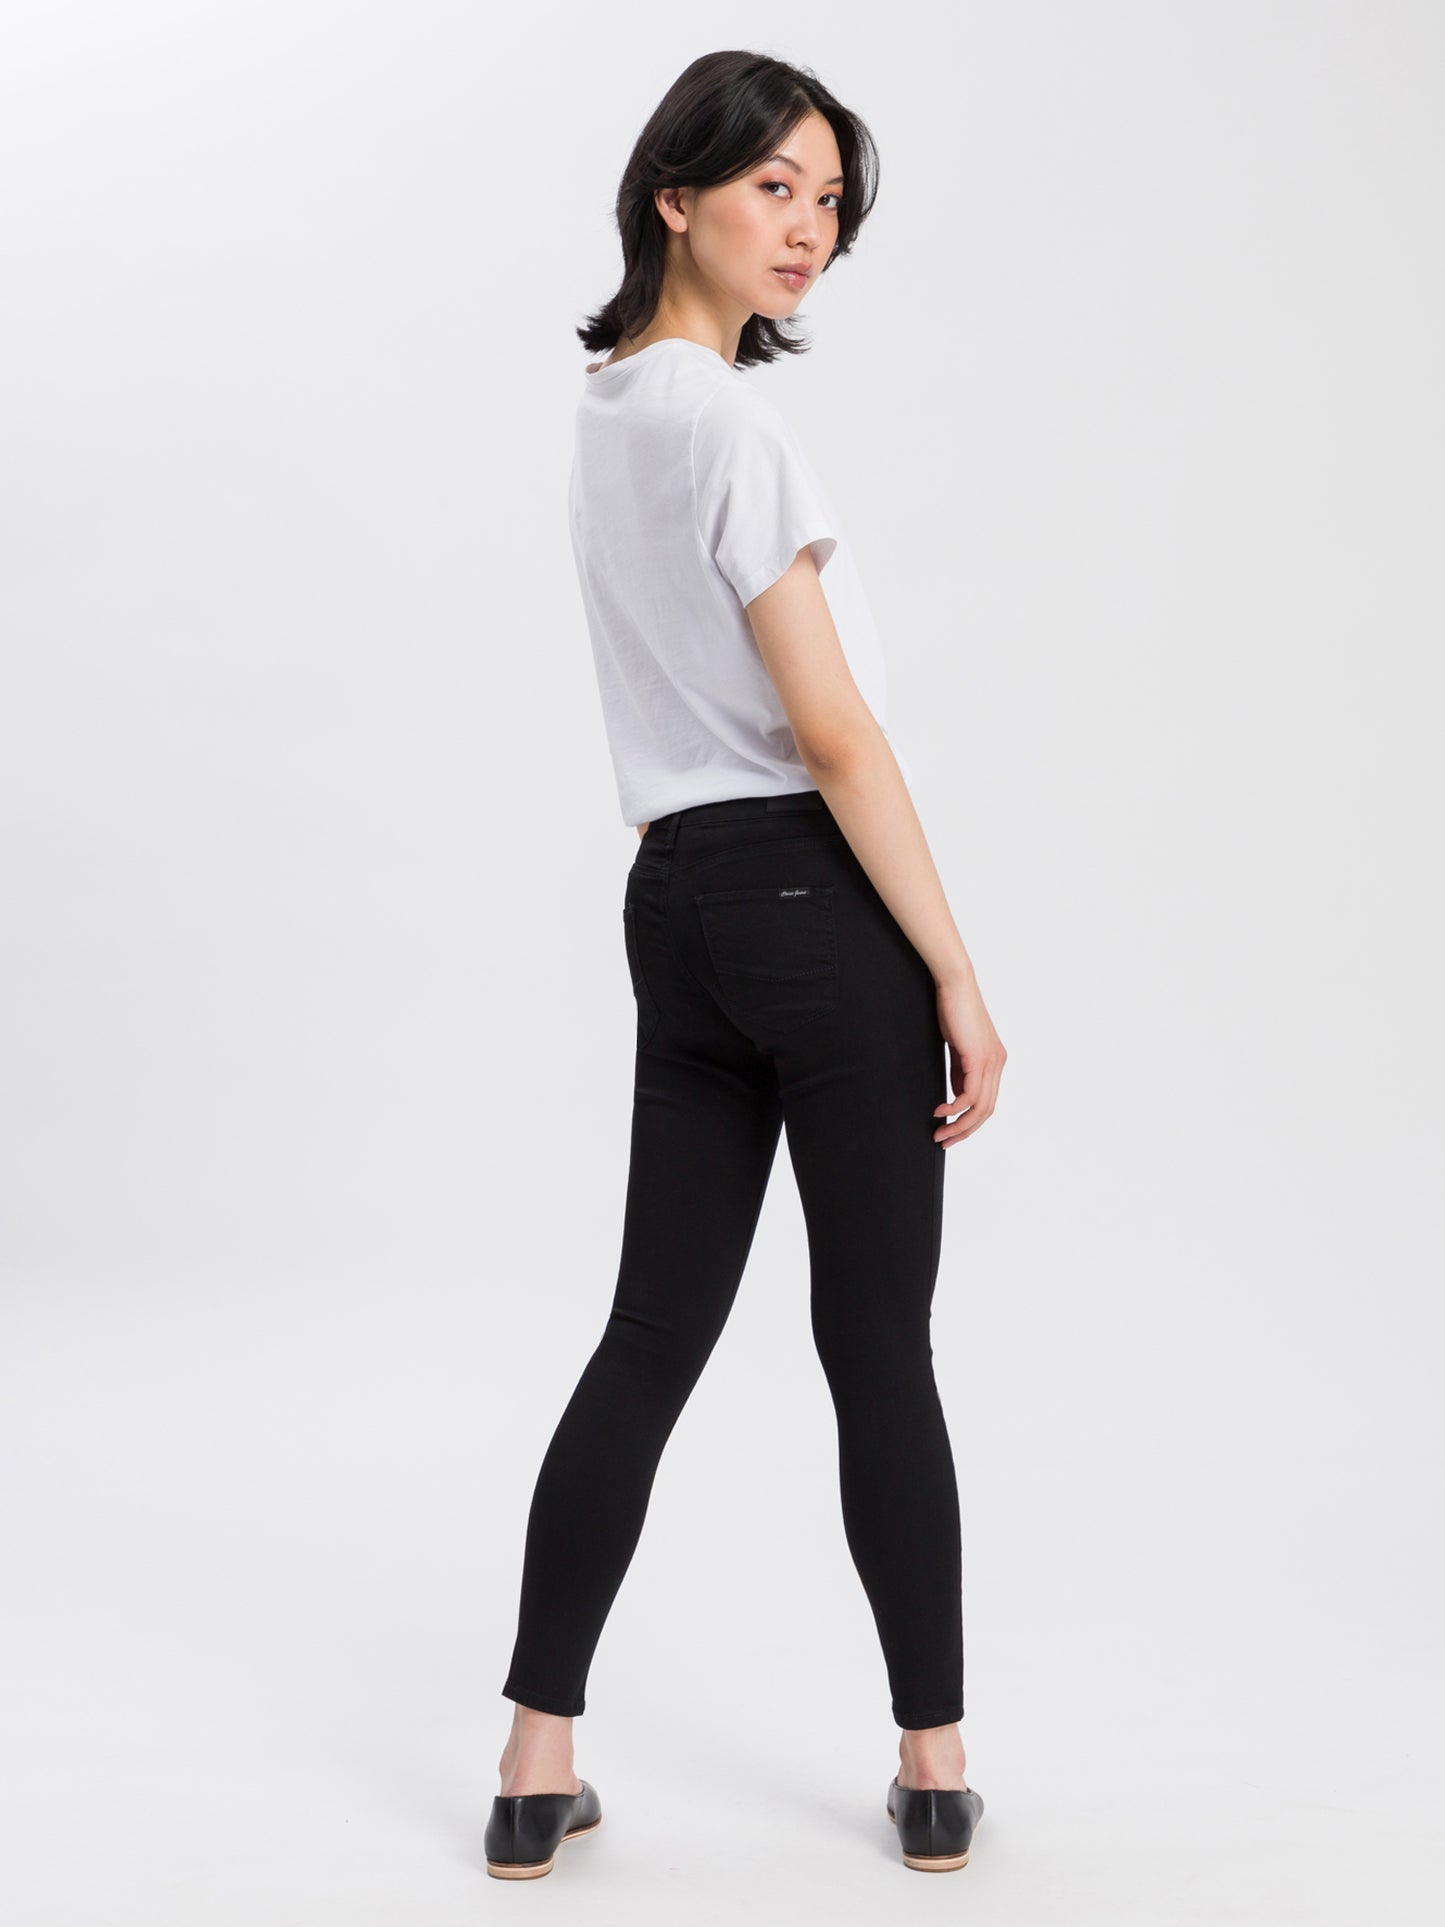 Giselle Damen Jeans Super Skinny Fit Mid Waist Ankle Lenght schwarz